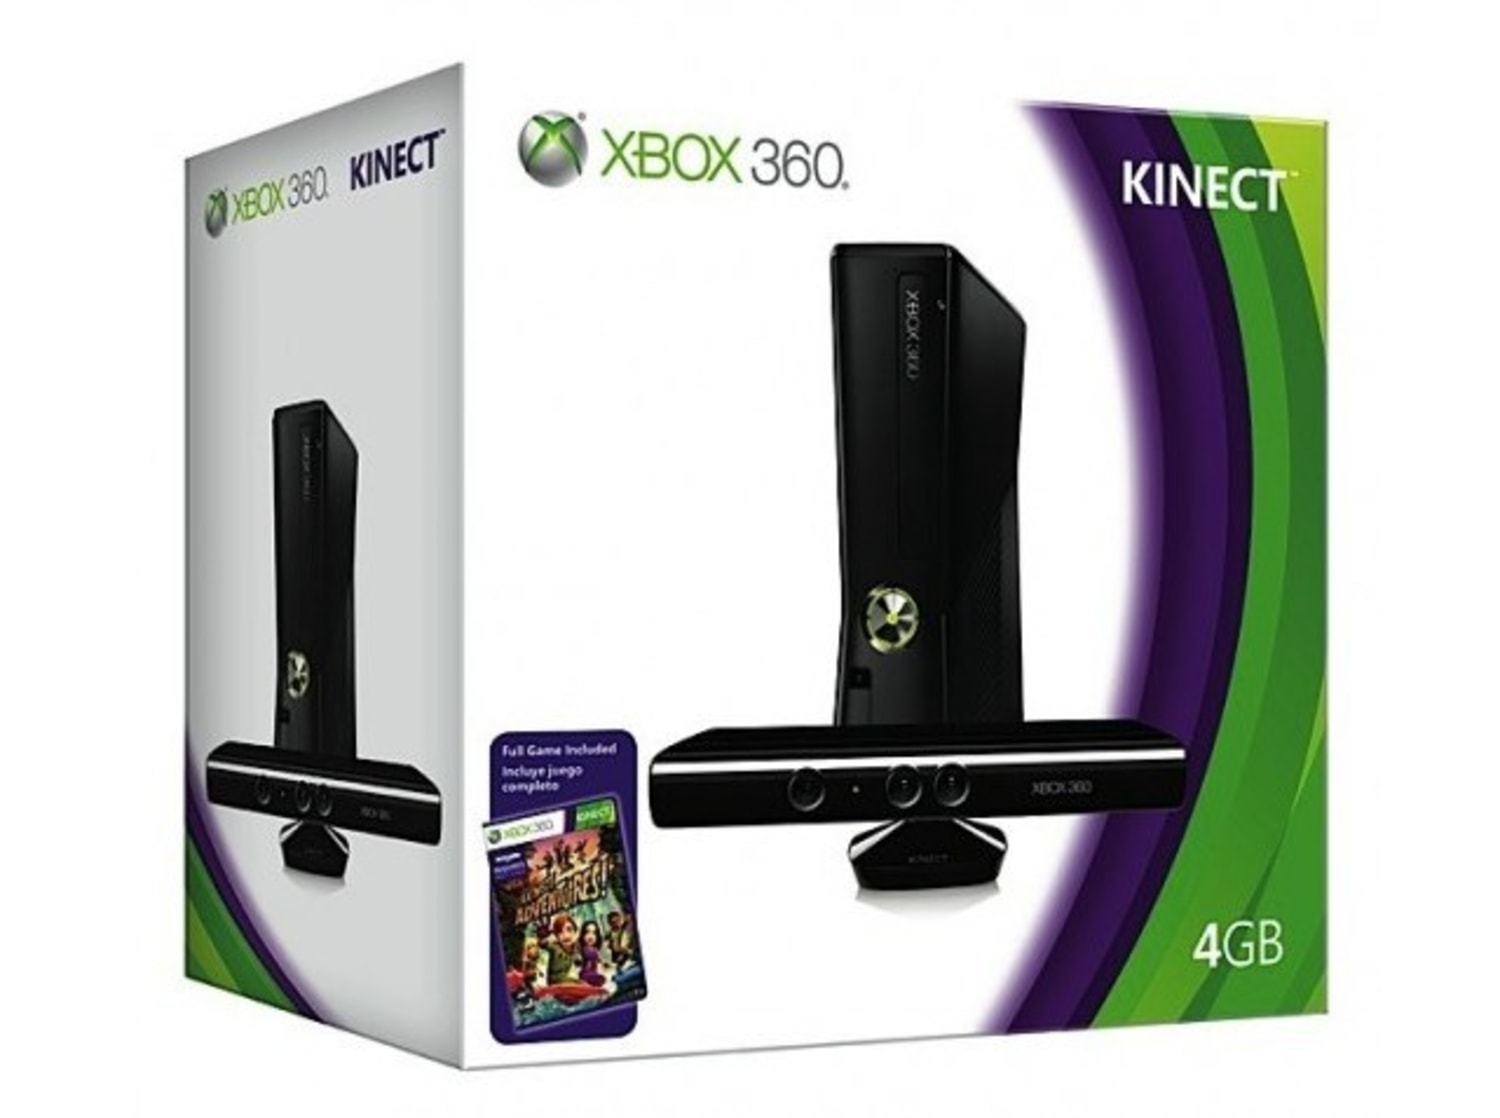 Xbox 360 life. Xbox 360 e Kinect. Кинект Адвентурес Xbox 360. Сенсор Kinect для консоли Xbox 360. Коробка Xbox 360 4gb Kinect.